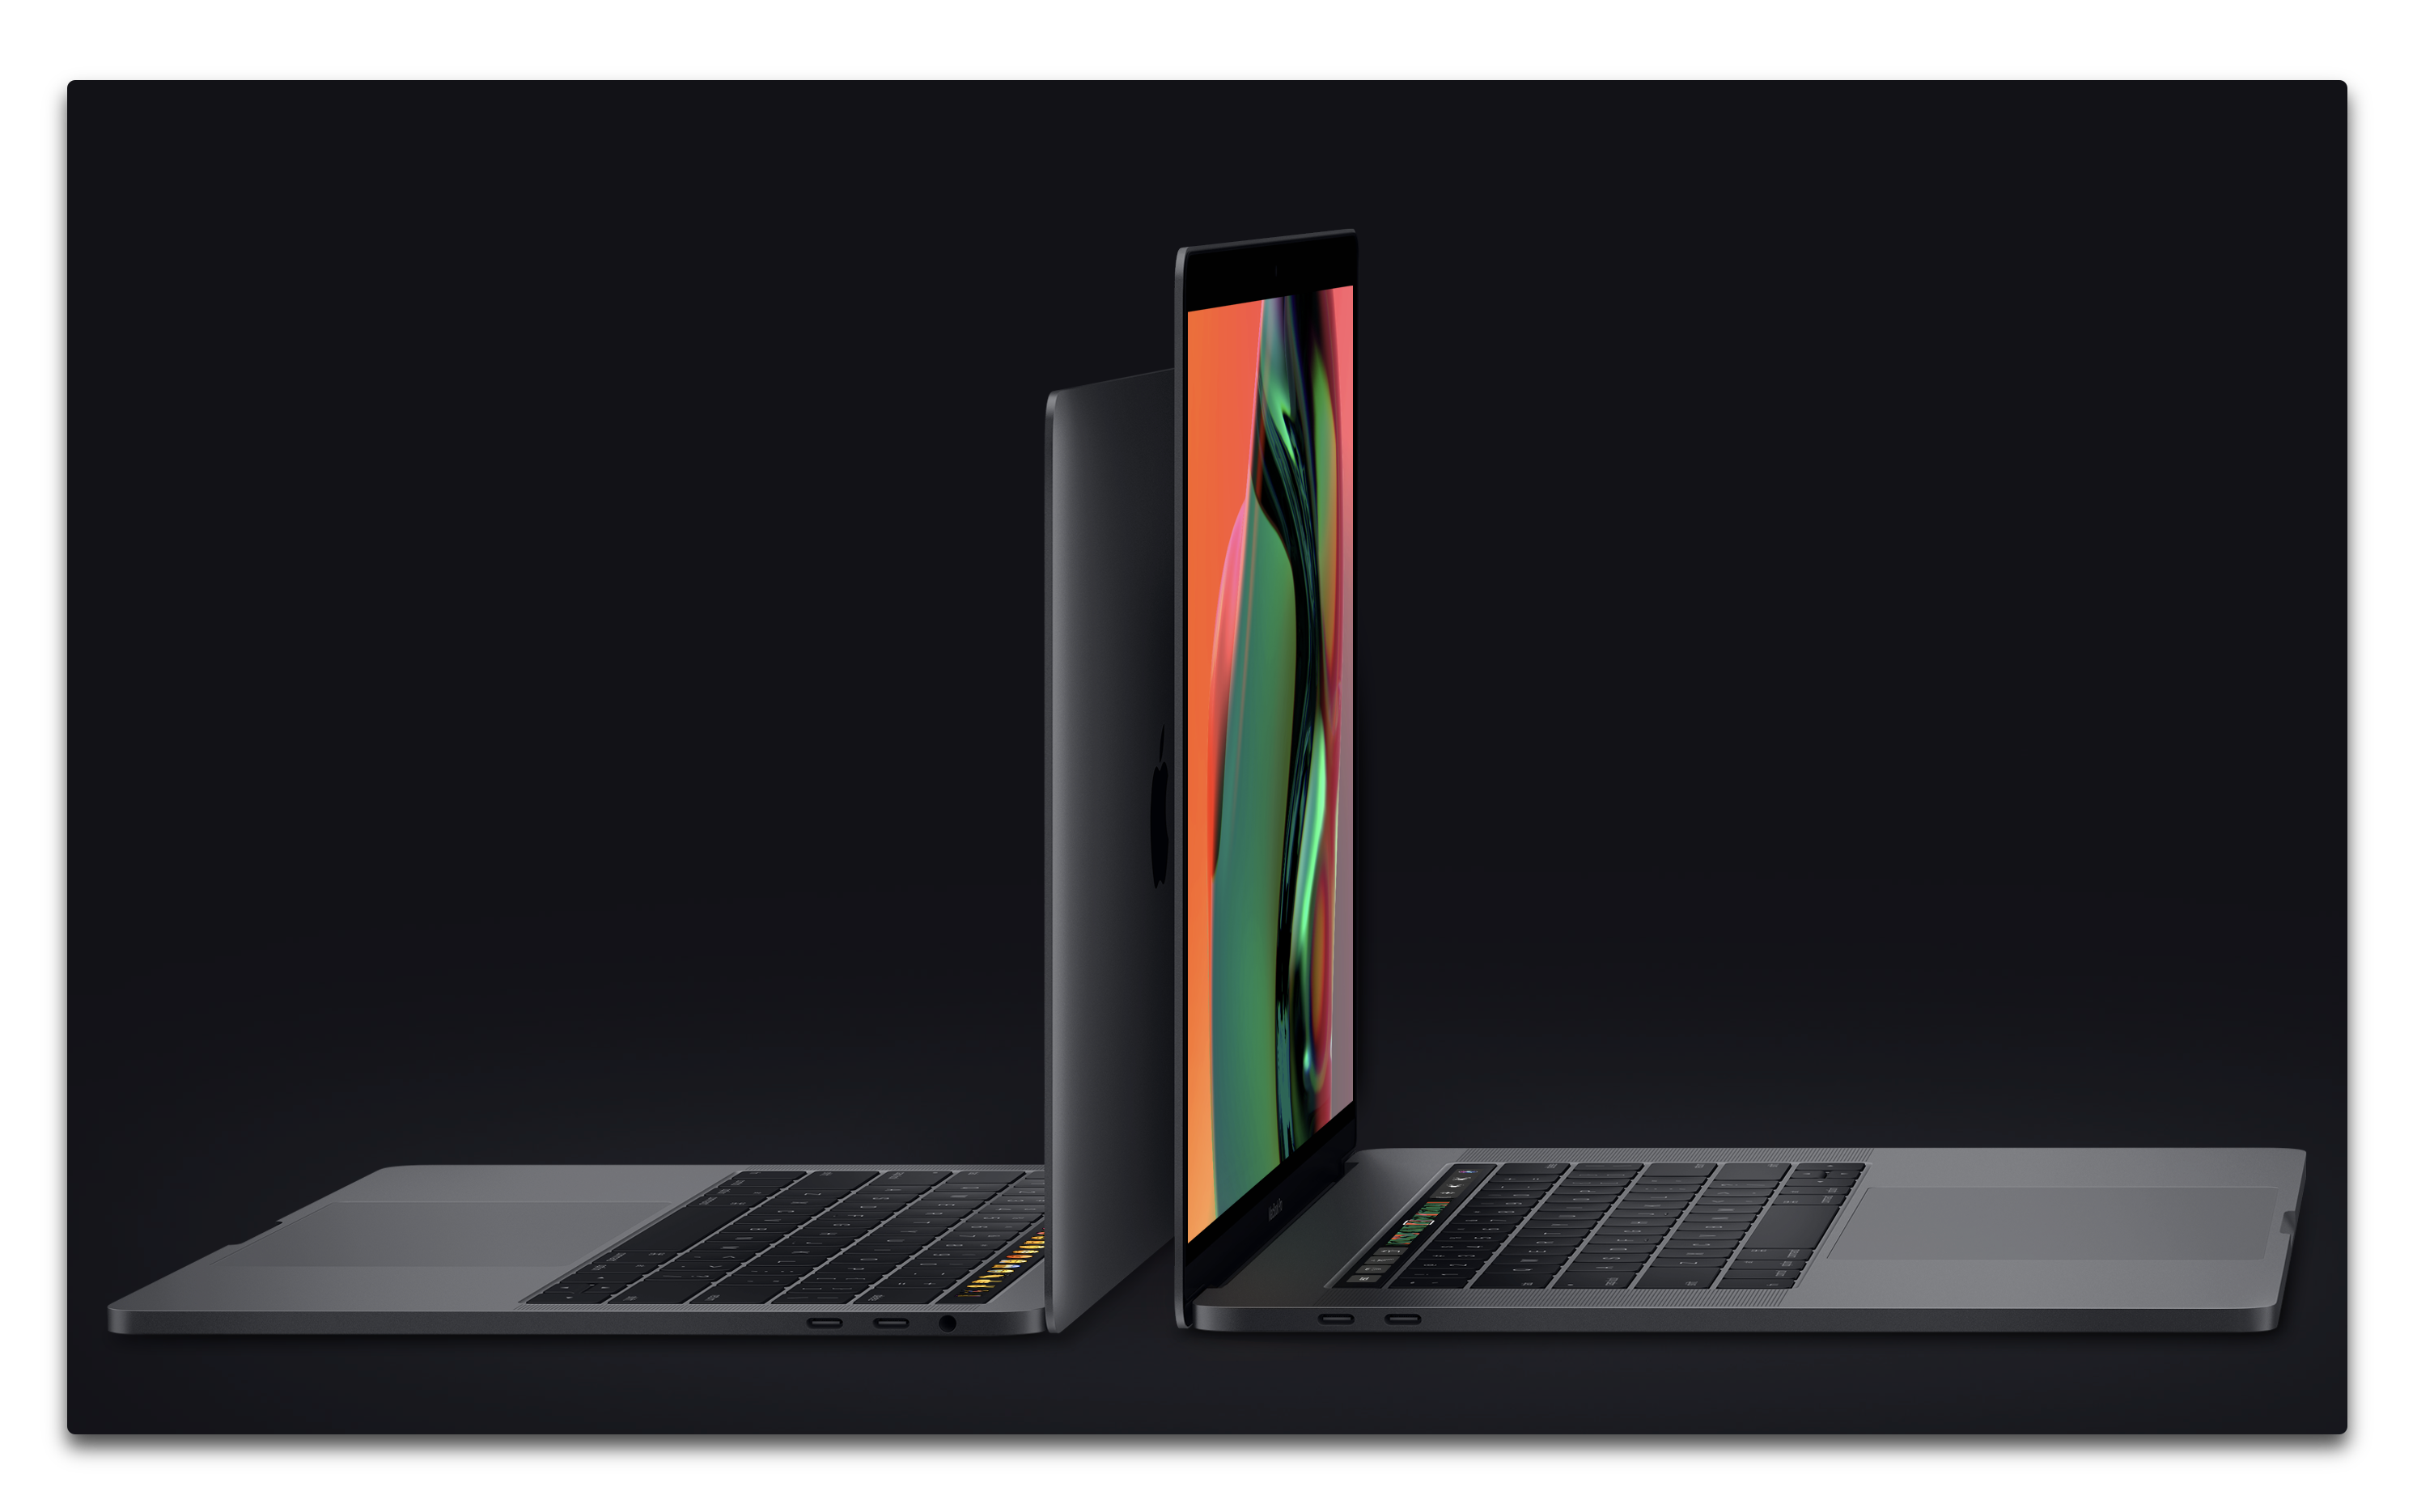 Appleの2018 MacBook Proは、ベンチマークの結果ラップトップで最速のSSDを搭載